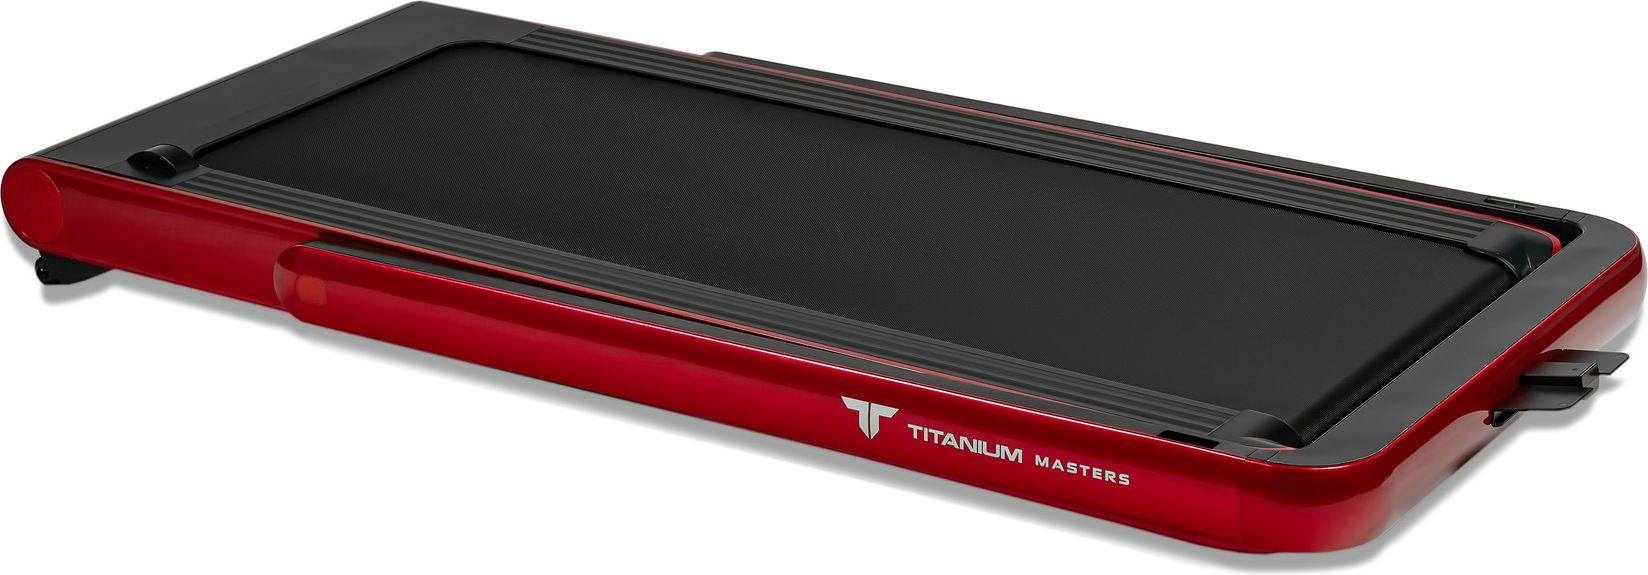 Titanium Masters Slimtech C20, красная ультракомпактные